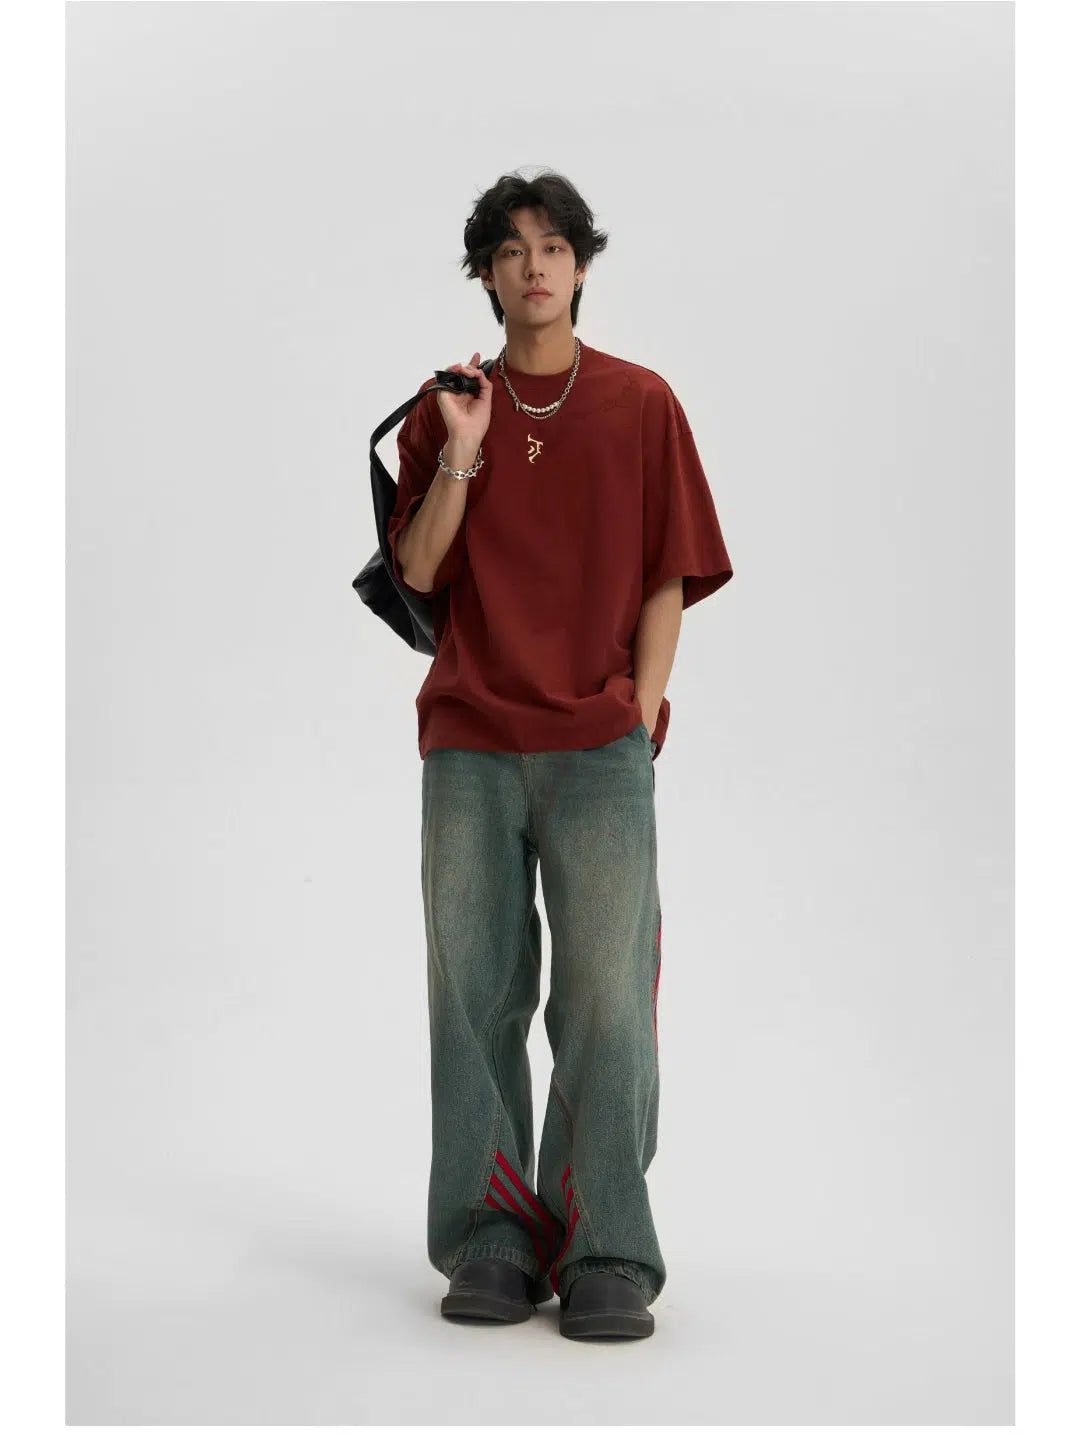 Thorned Stems Grunge T-Shirt Korean Street Fashion T-Shirt By JHYQ Shop Online at OH Vault